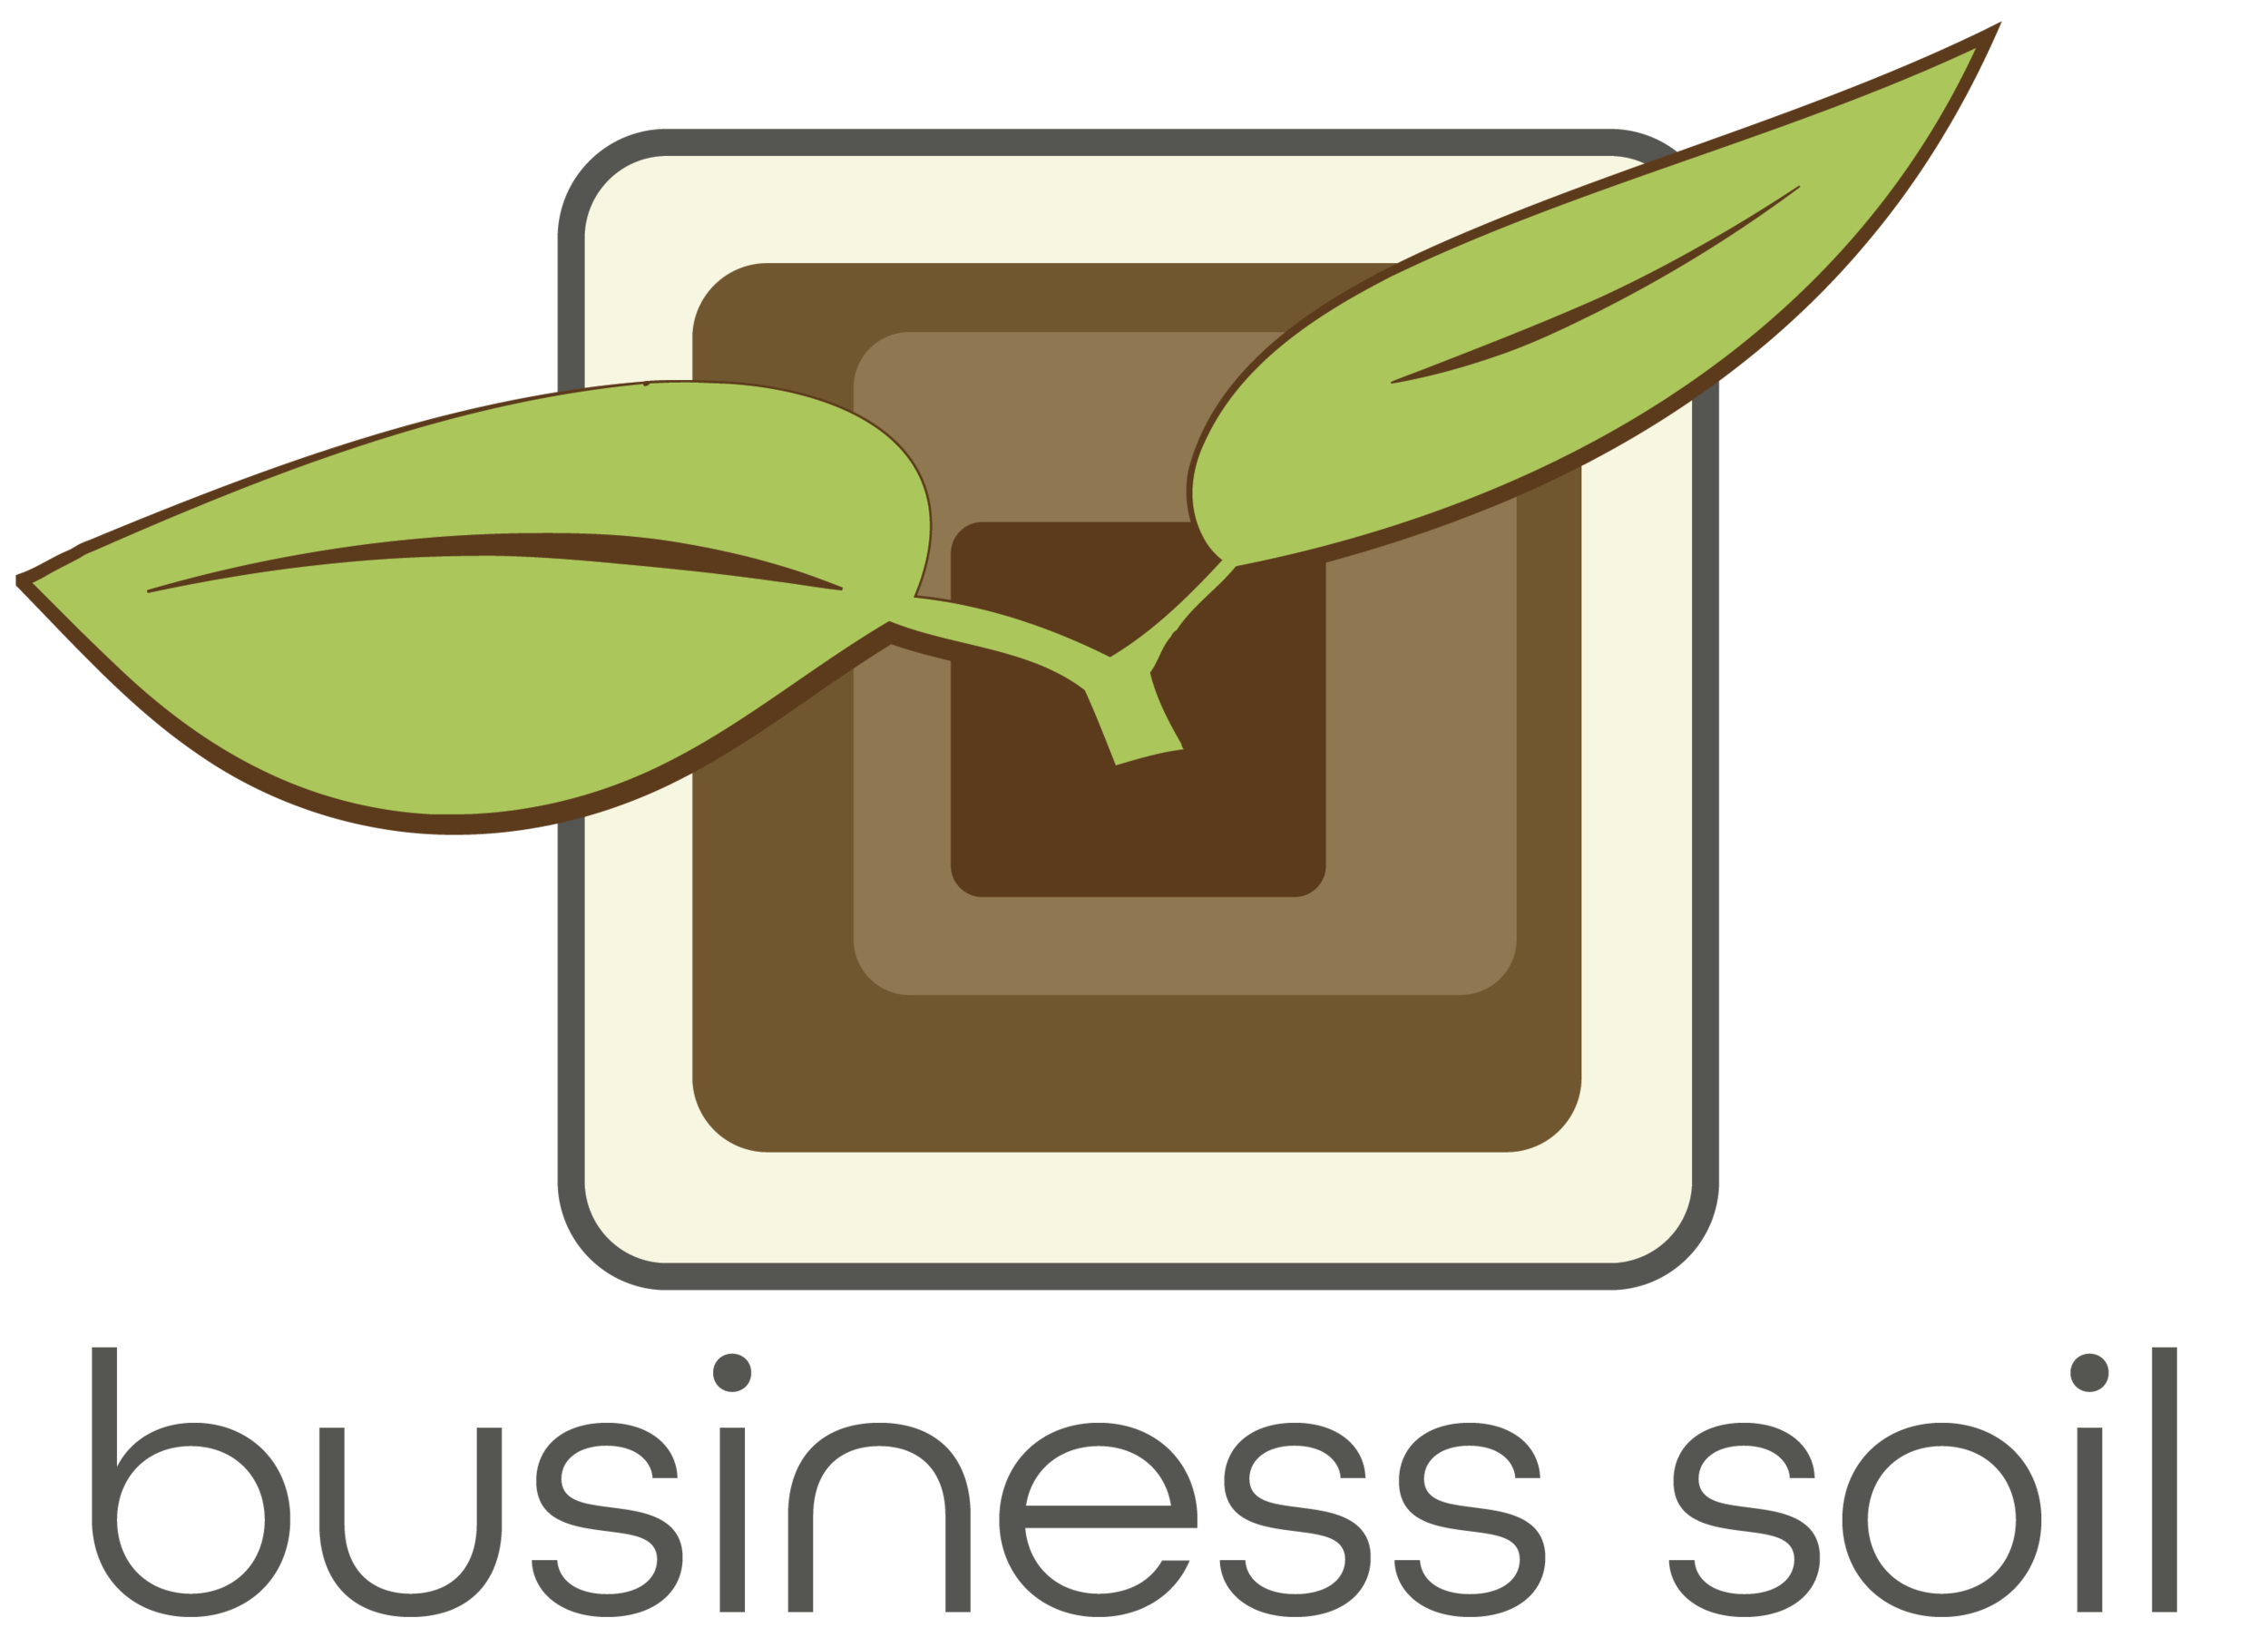 2022 Business Soil Logo - Vertical-01.png